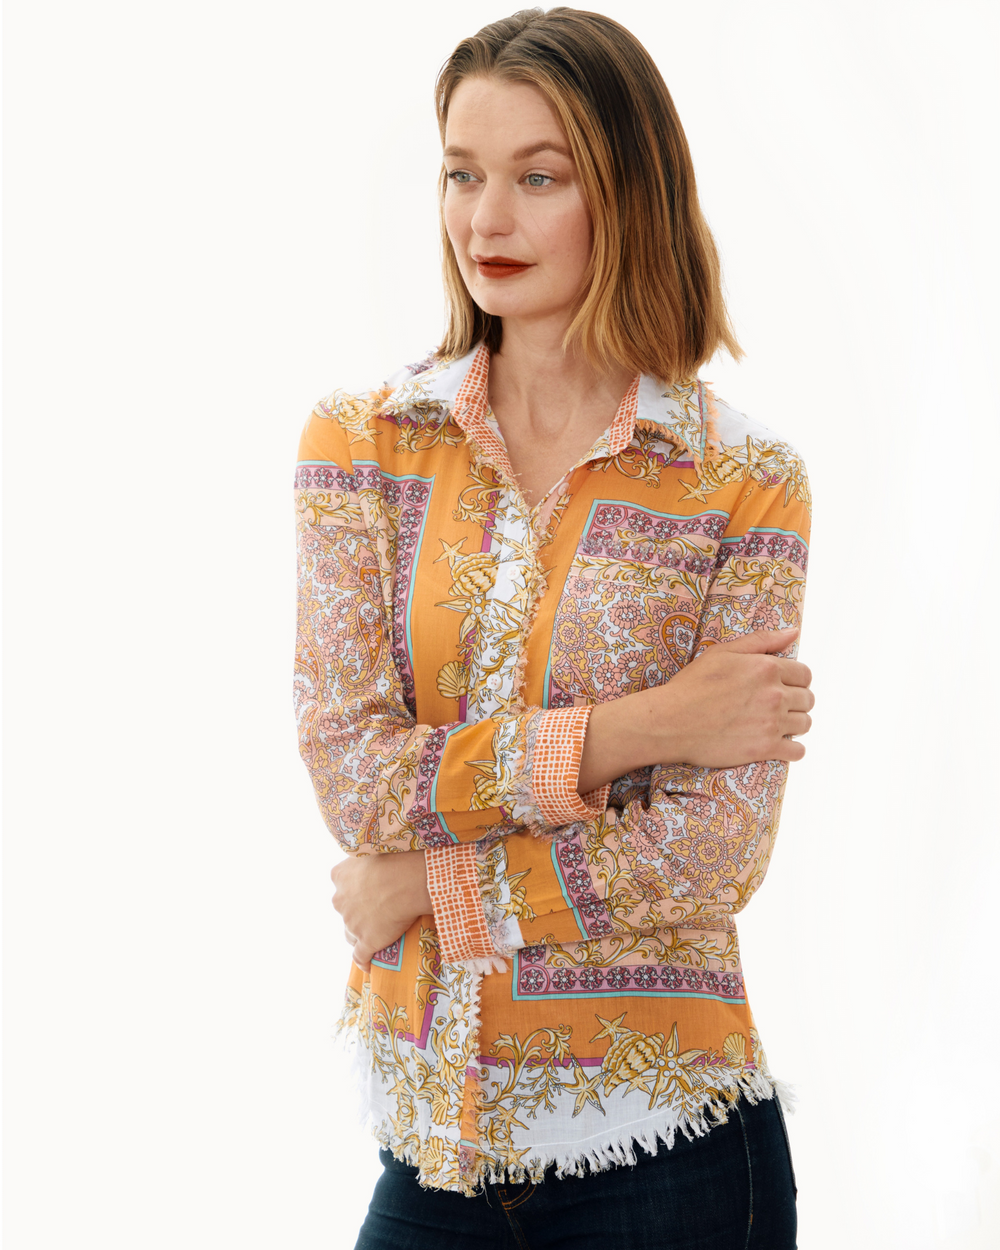 Dizzy-Lizzie Cape Cod Orange Shirt With Engineered Print